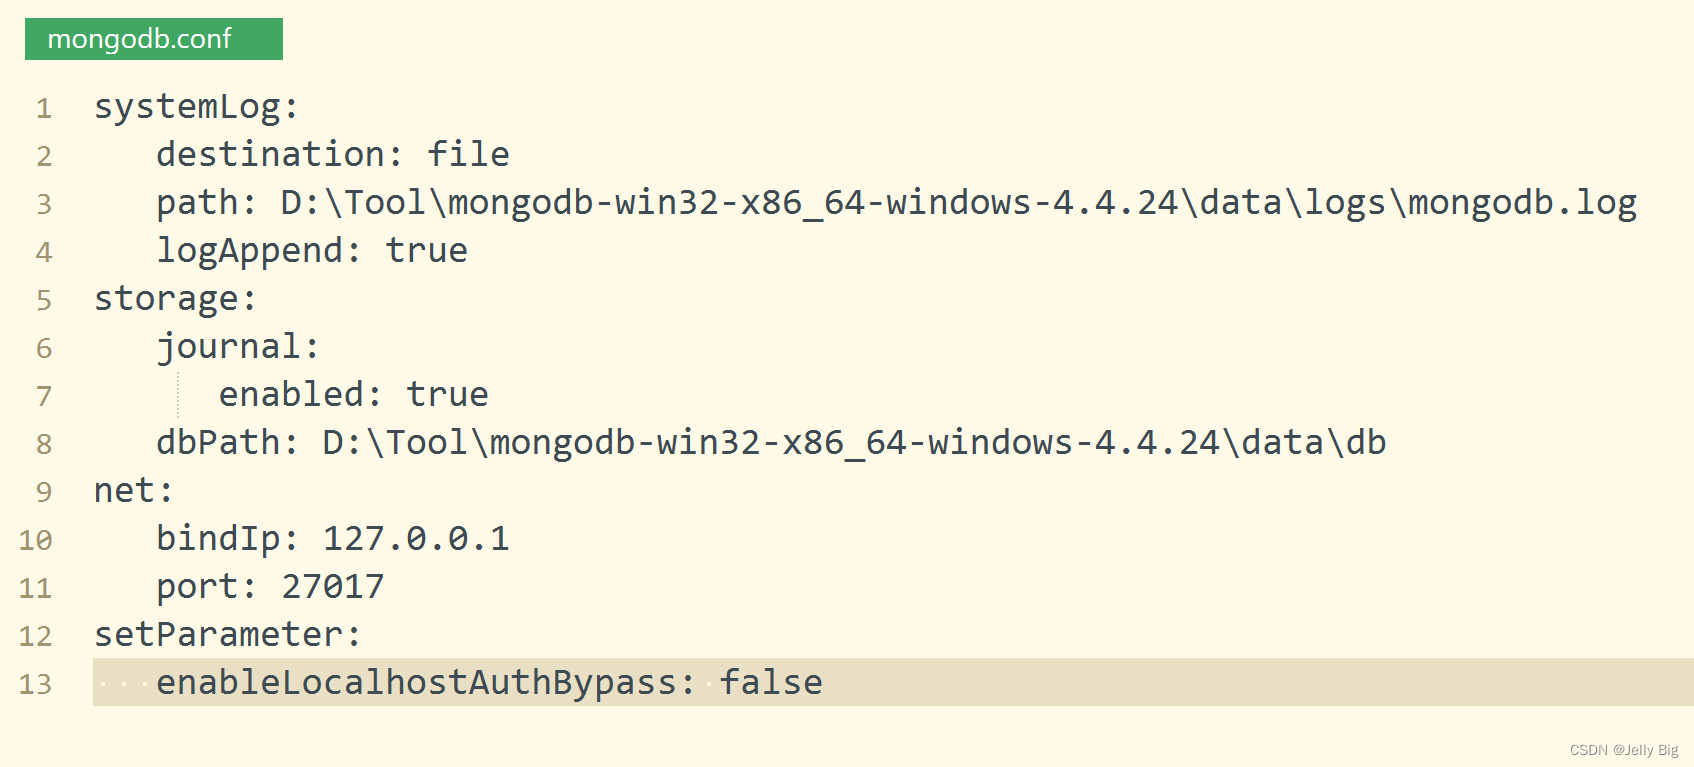 systemLog:    destination: file    path: D:\Tool\mongodb-win32-x86_64-windows-4.4.24\data\logs\mongodb.log    logAppend: true storage:    journal:       enabled: true    dbPath: D:\Tool\mongodb-win32-x86_64-windows-4.4.24\data\db net:    bindIp: 127.0.0.1    port: 27017 setParameter:    enableLocalhostAuthBypass: false